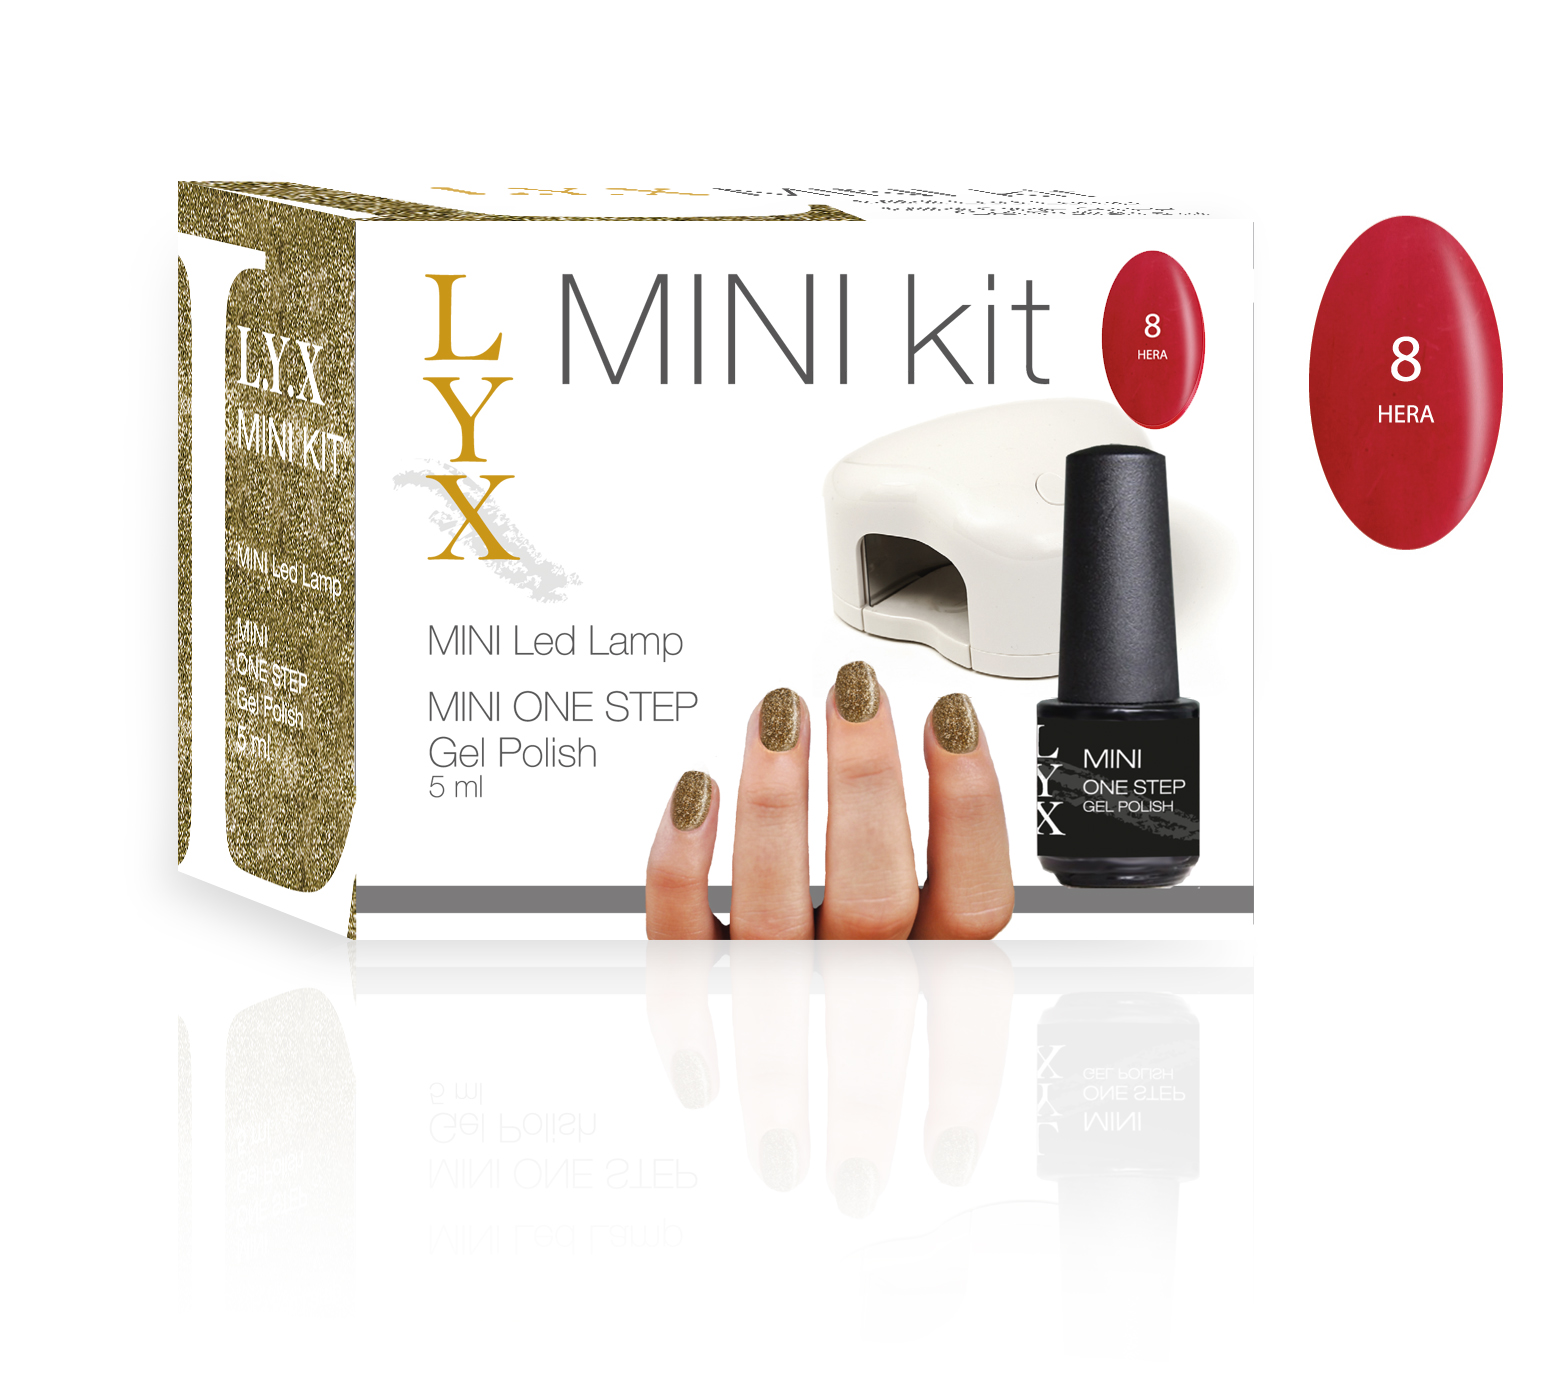 LYX Cosmetics Minikit Hera